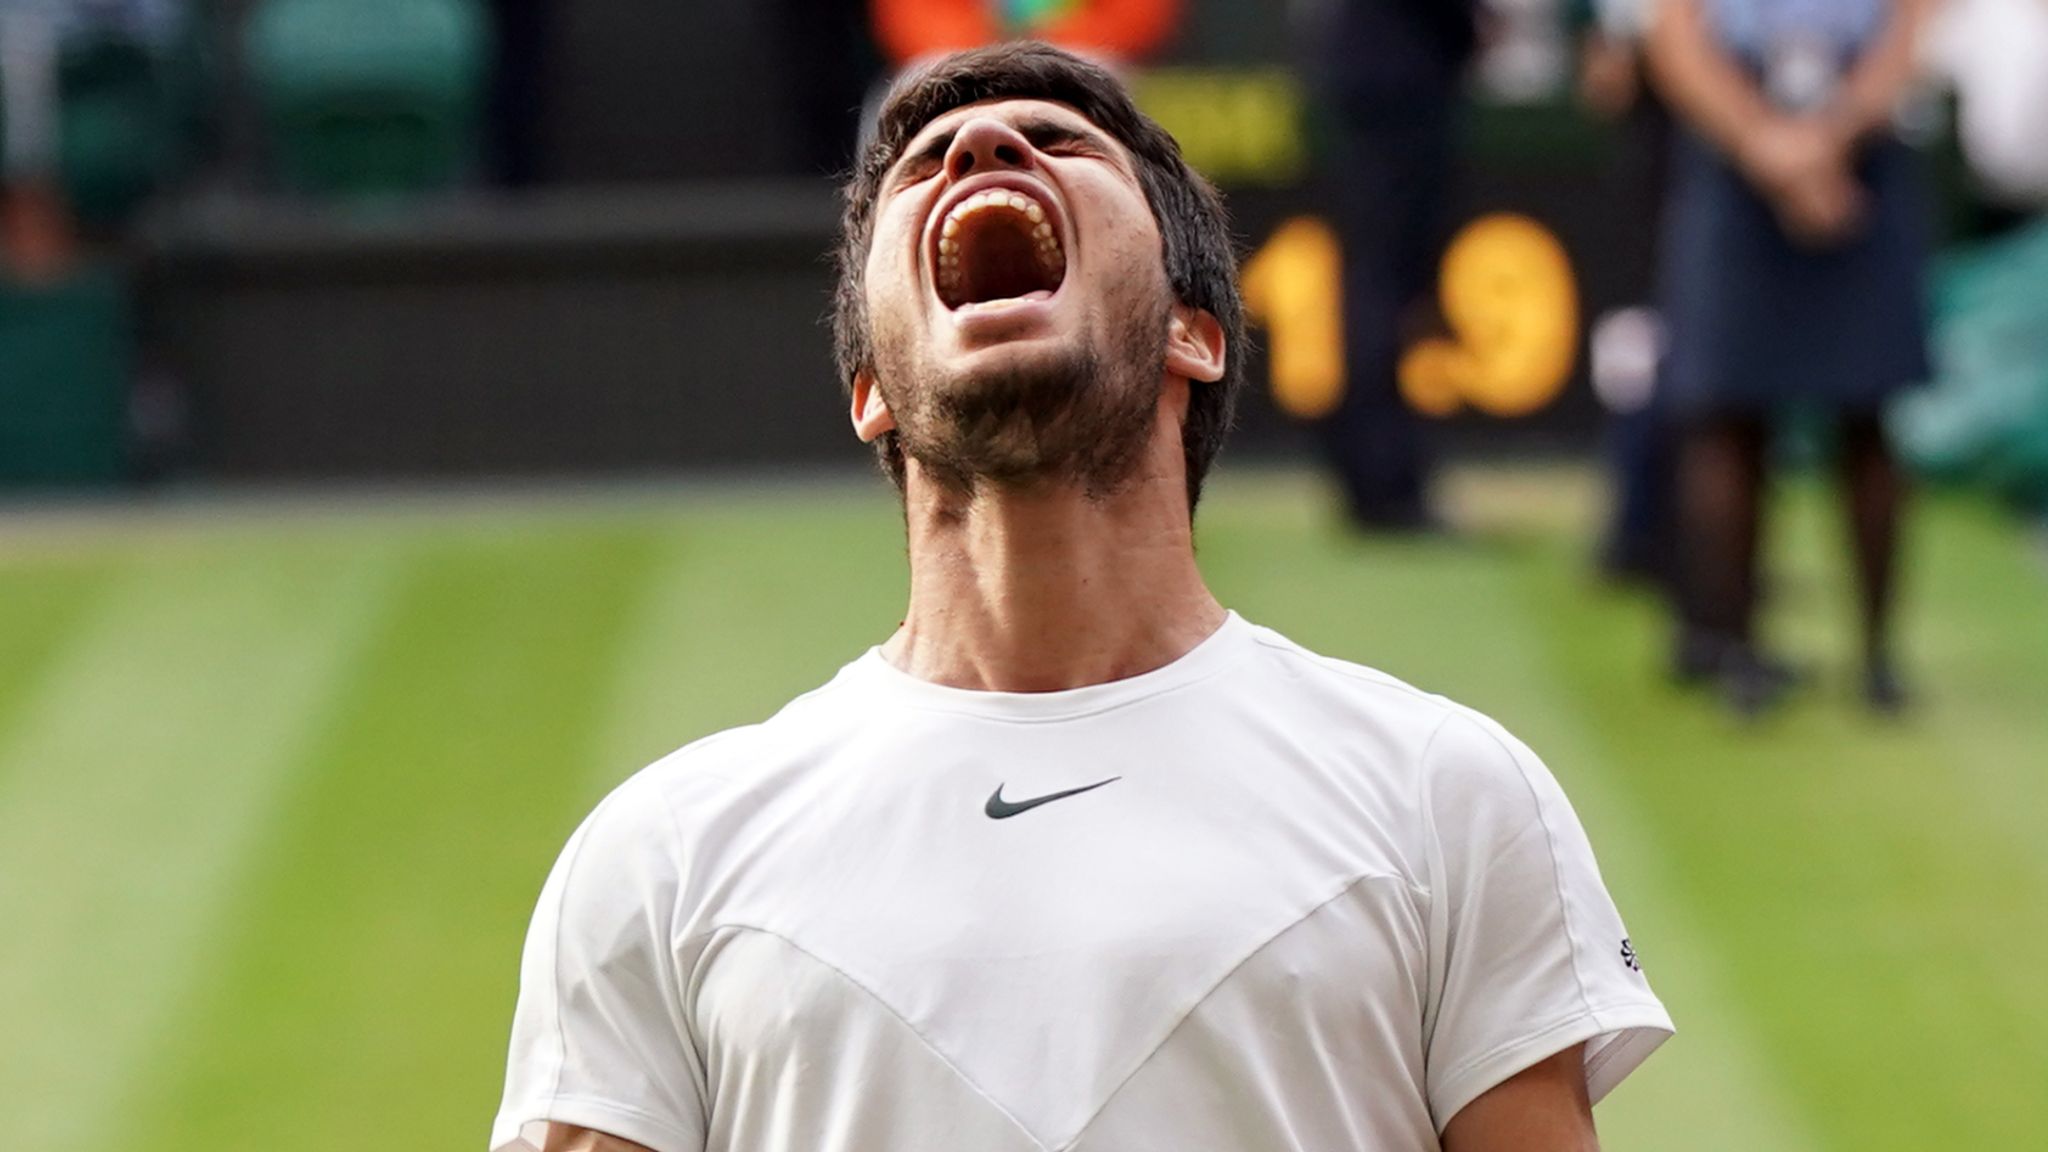 Wimbledon Novak Djokovic praises complete champion Carlos Alcaraz as blend of Roger Federer, Rafael Nadal and himself after epic final Tennis News Sky Sports